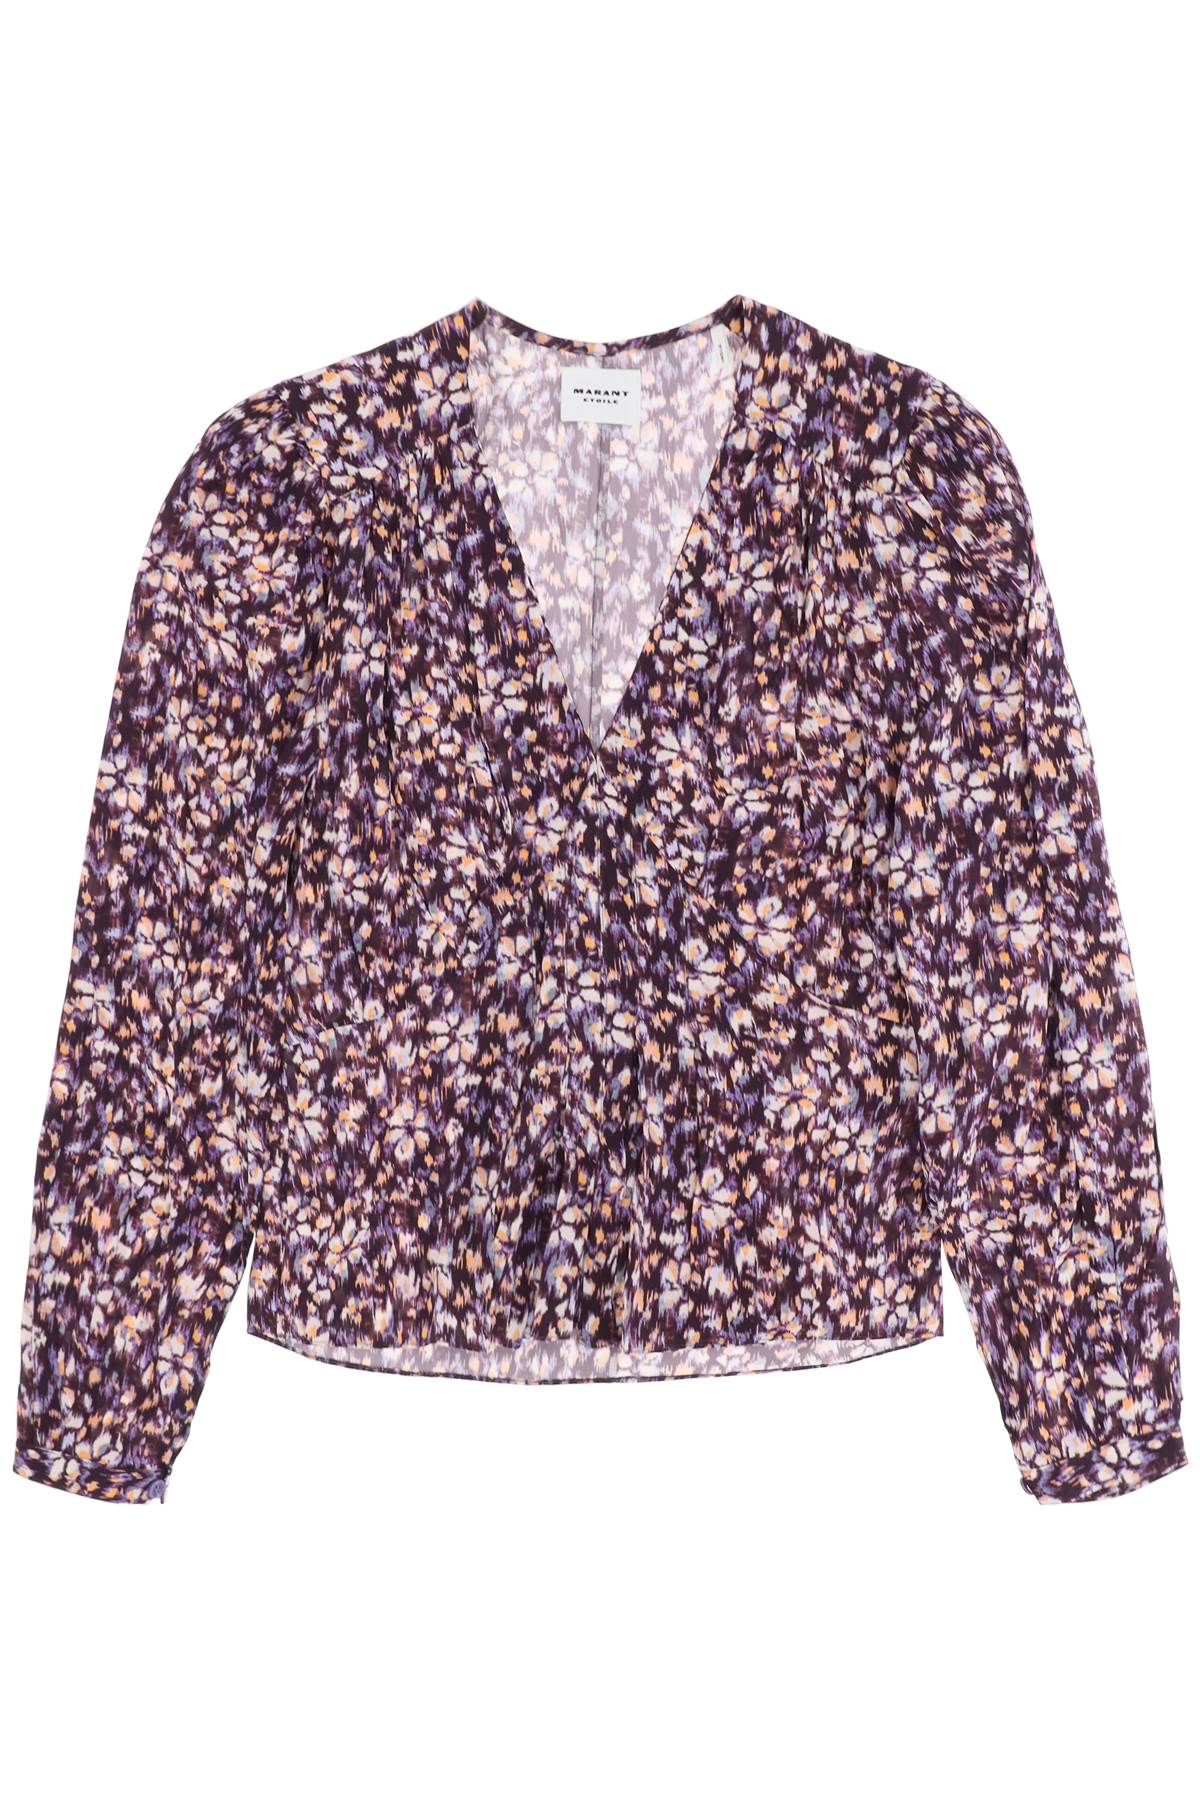 Isabel marant etoile eddy floral crepe blouse-0